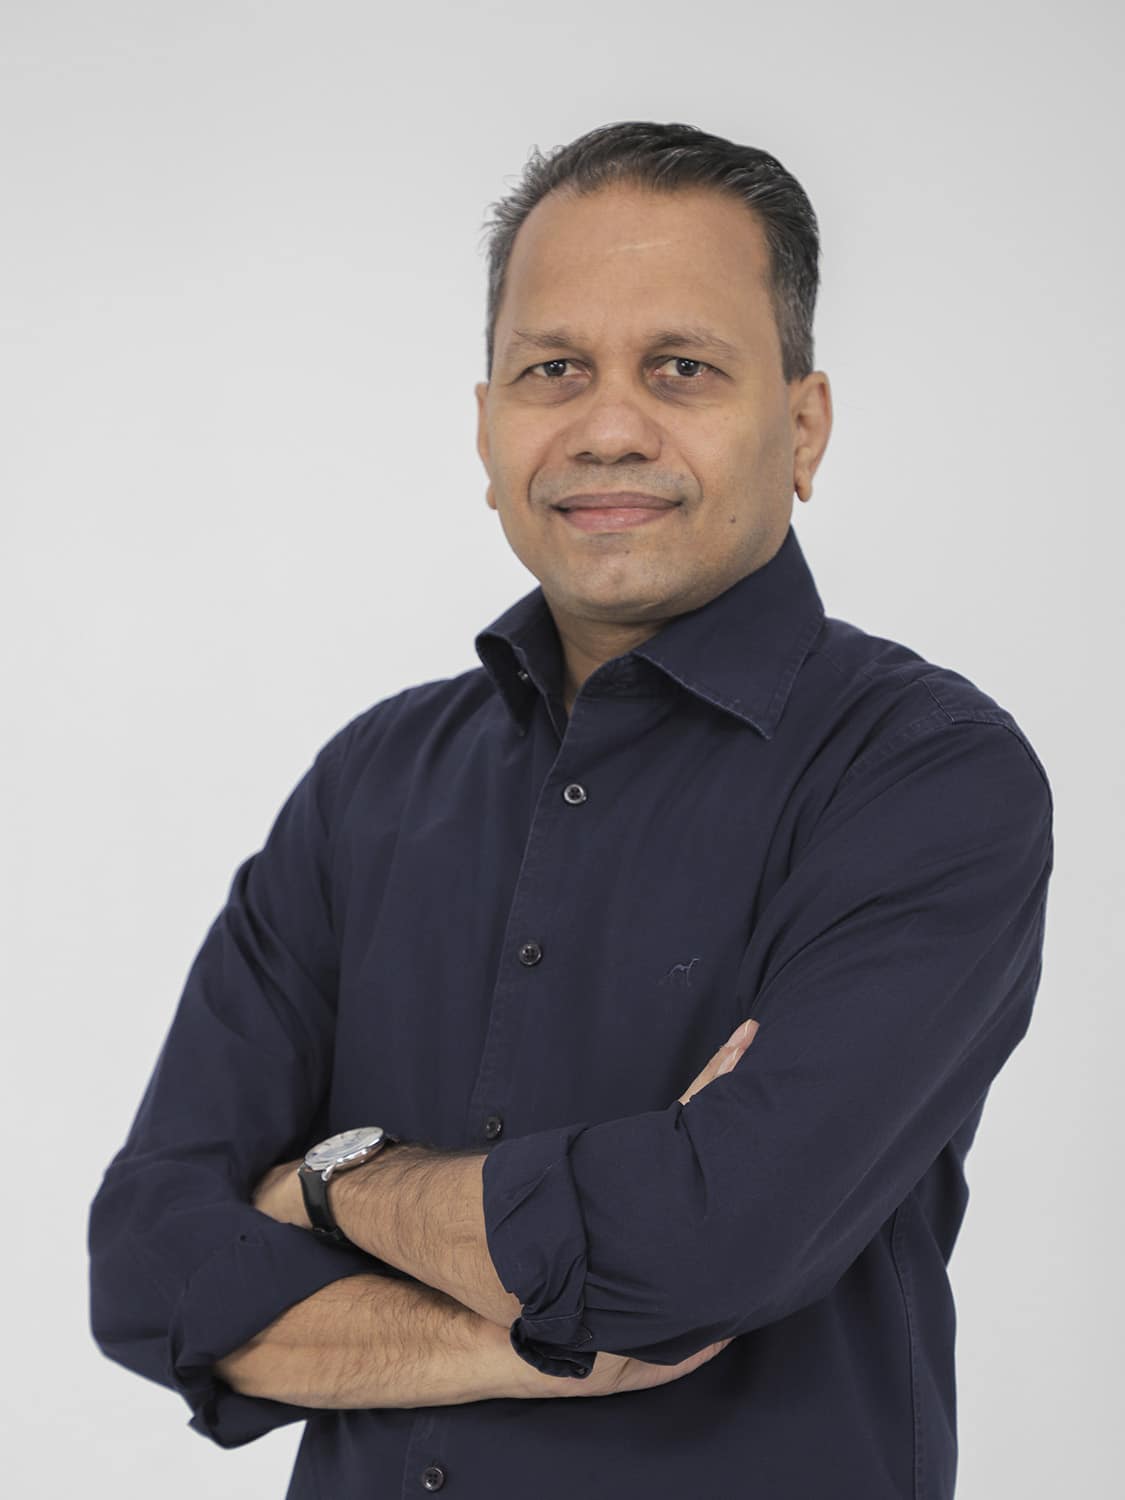 Bala Murali Subramaney, CTO of Astro Radio